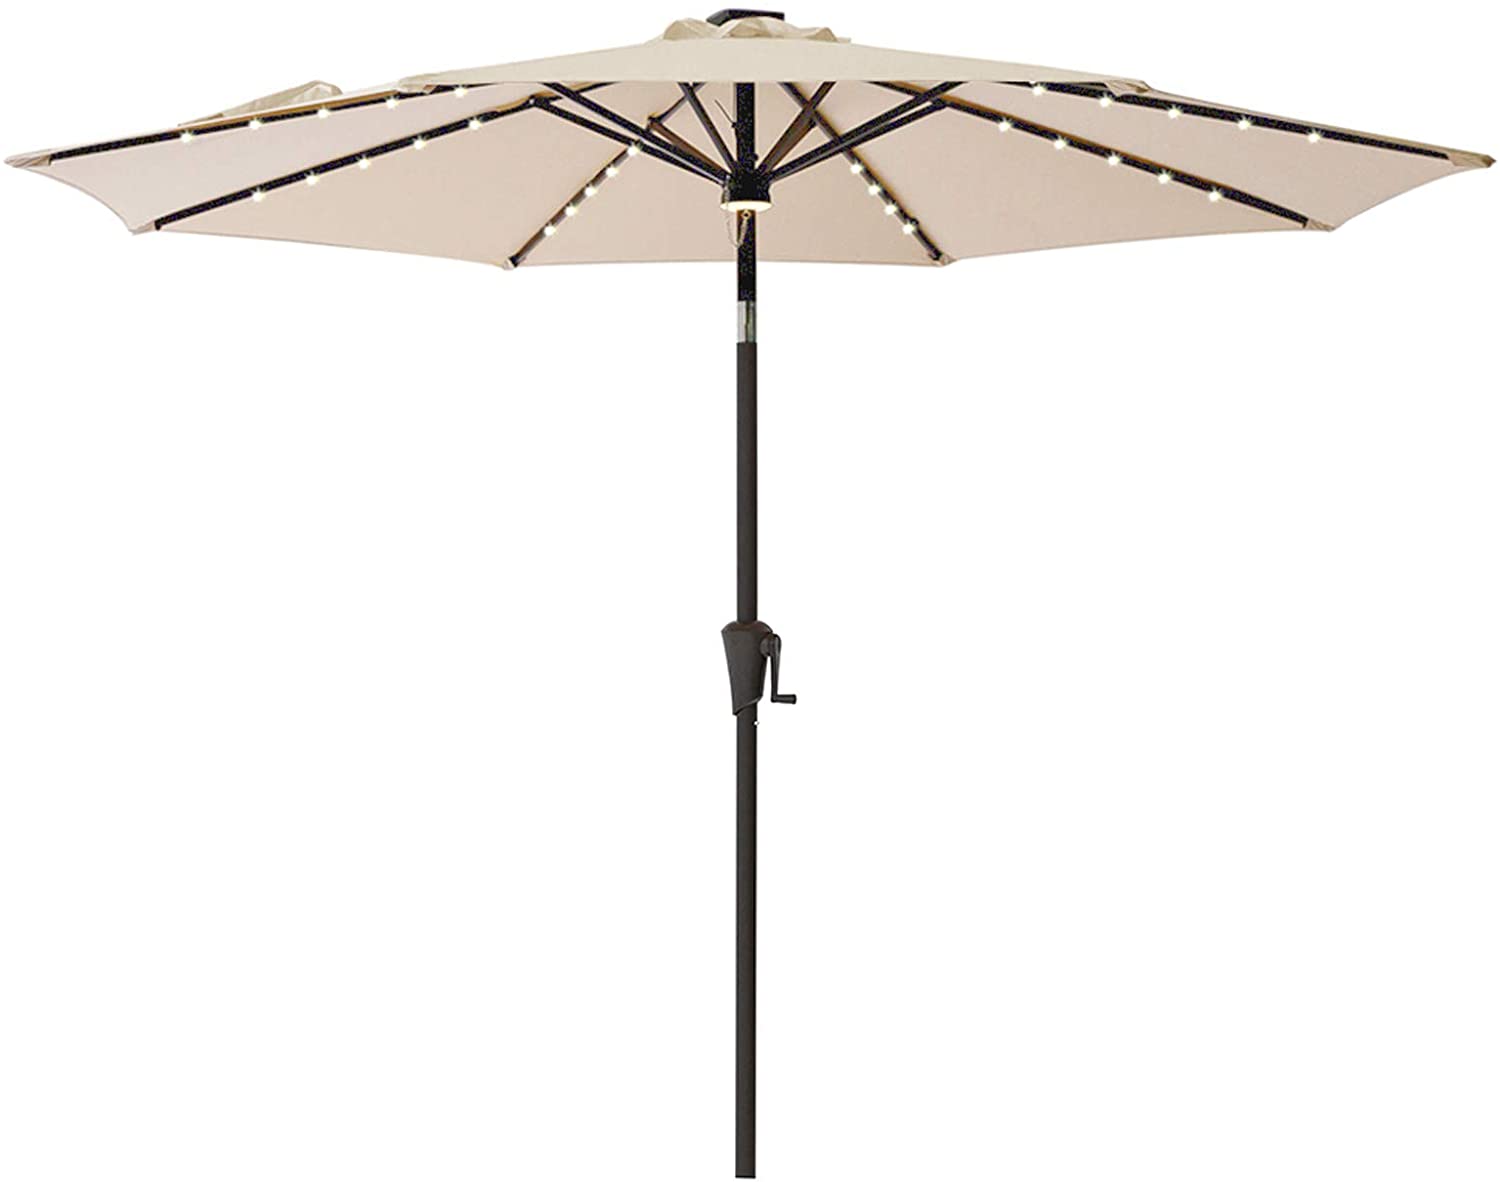 C-Hopetree Outdoor Patio Market Umbrella